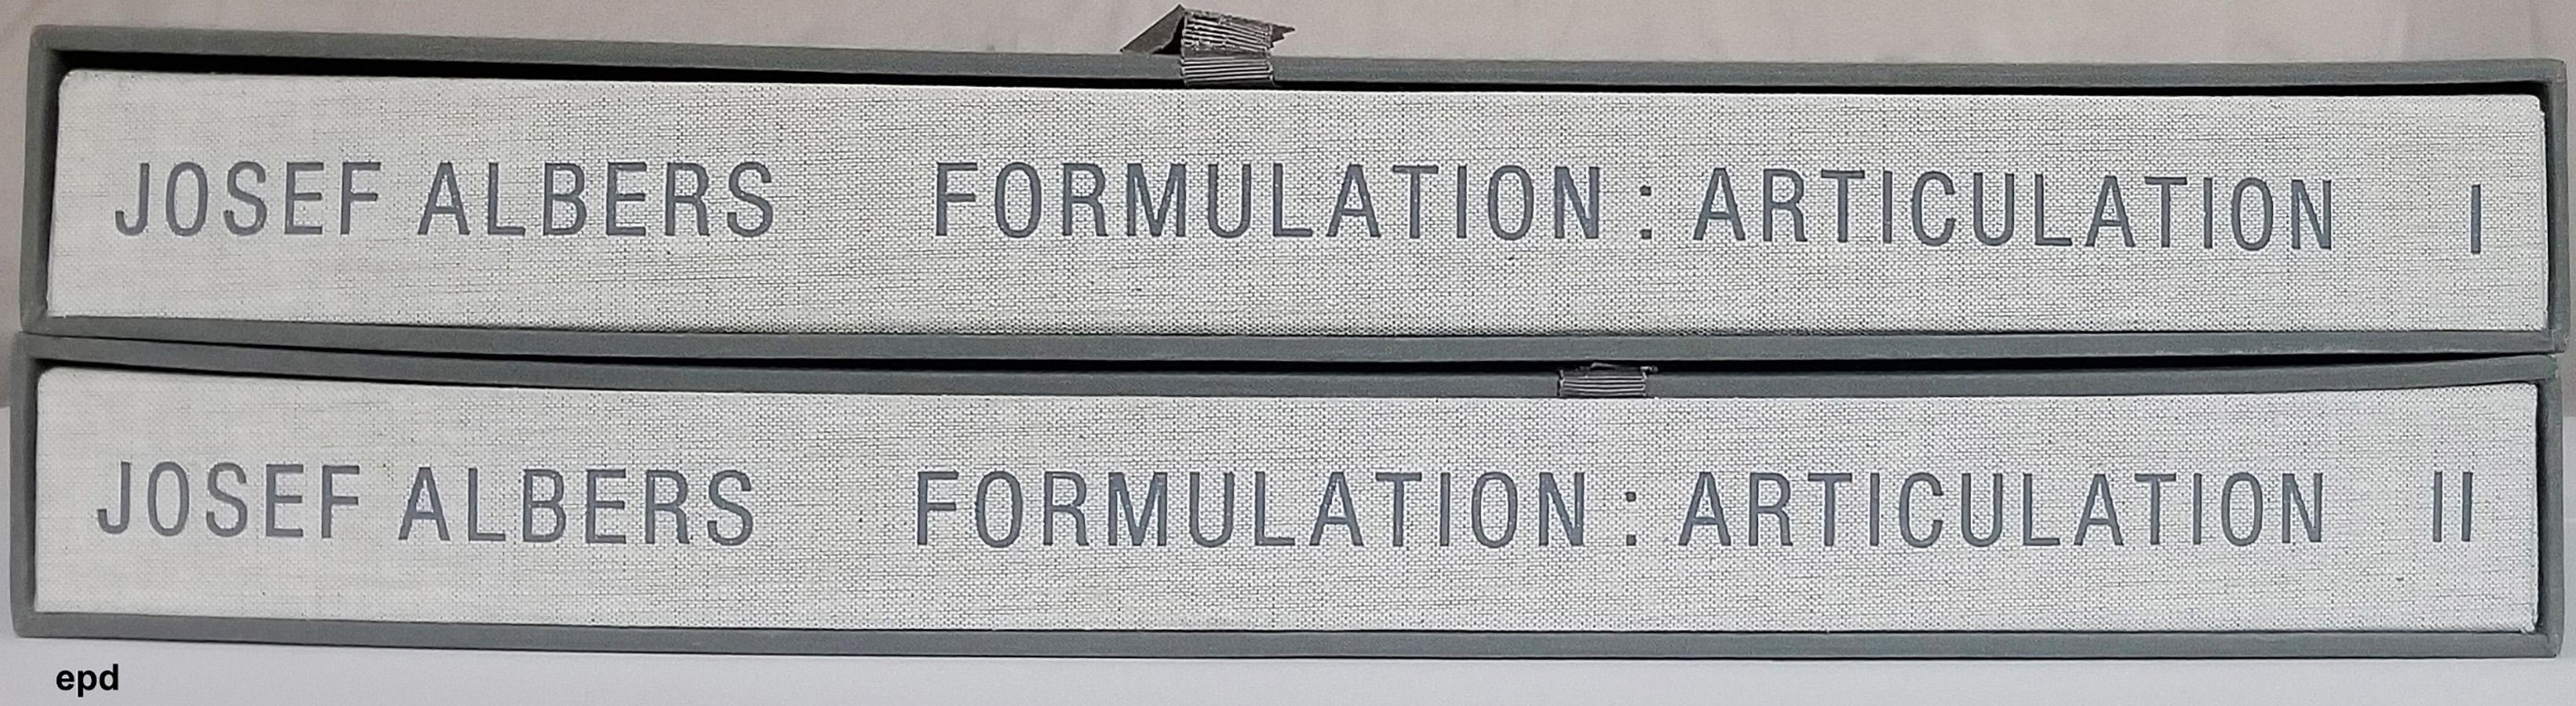 Josef Albers Abstract Print - FORMULATION  ARTICULATION